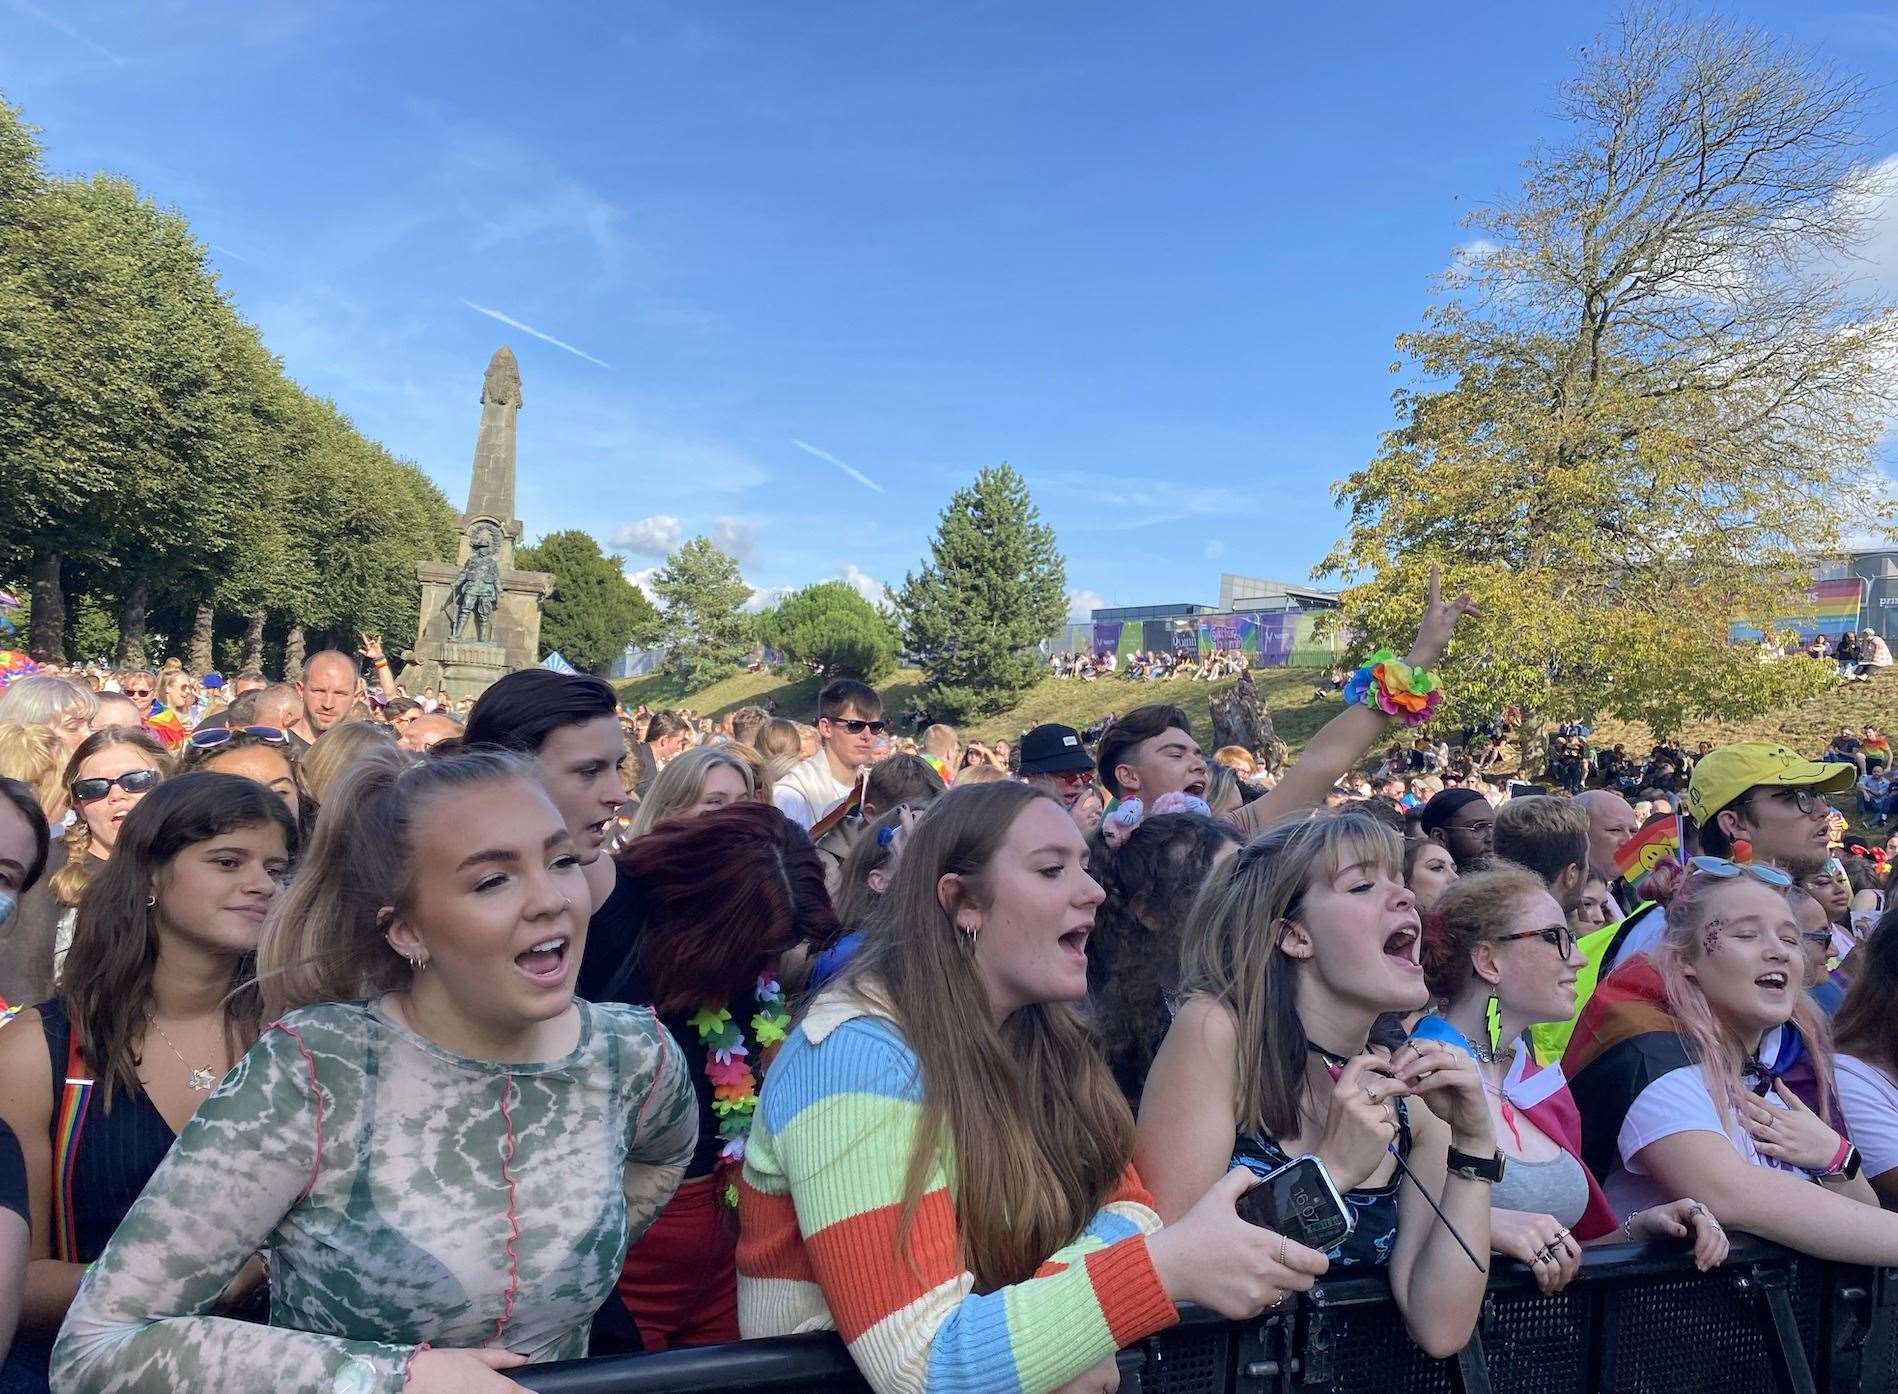 Thousands gathered in Dane John Gardens to enjoy the free entertainment